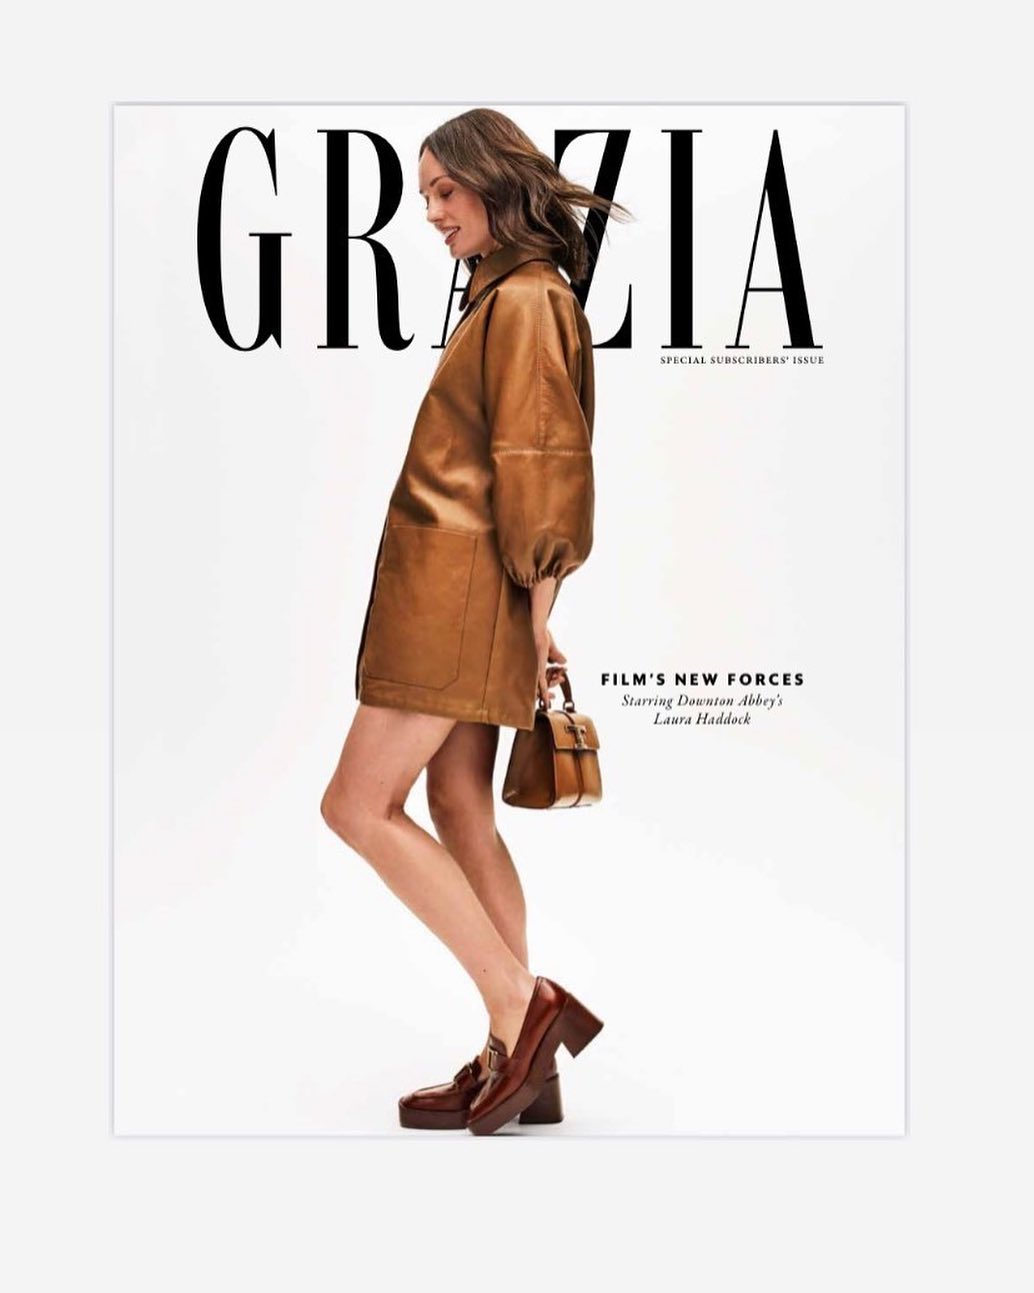 Laura Haddock on the cover of GRAZIA